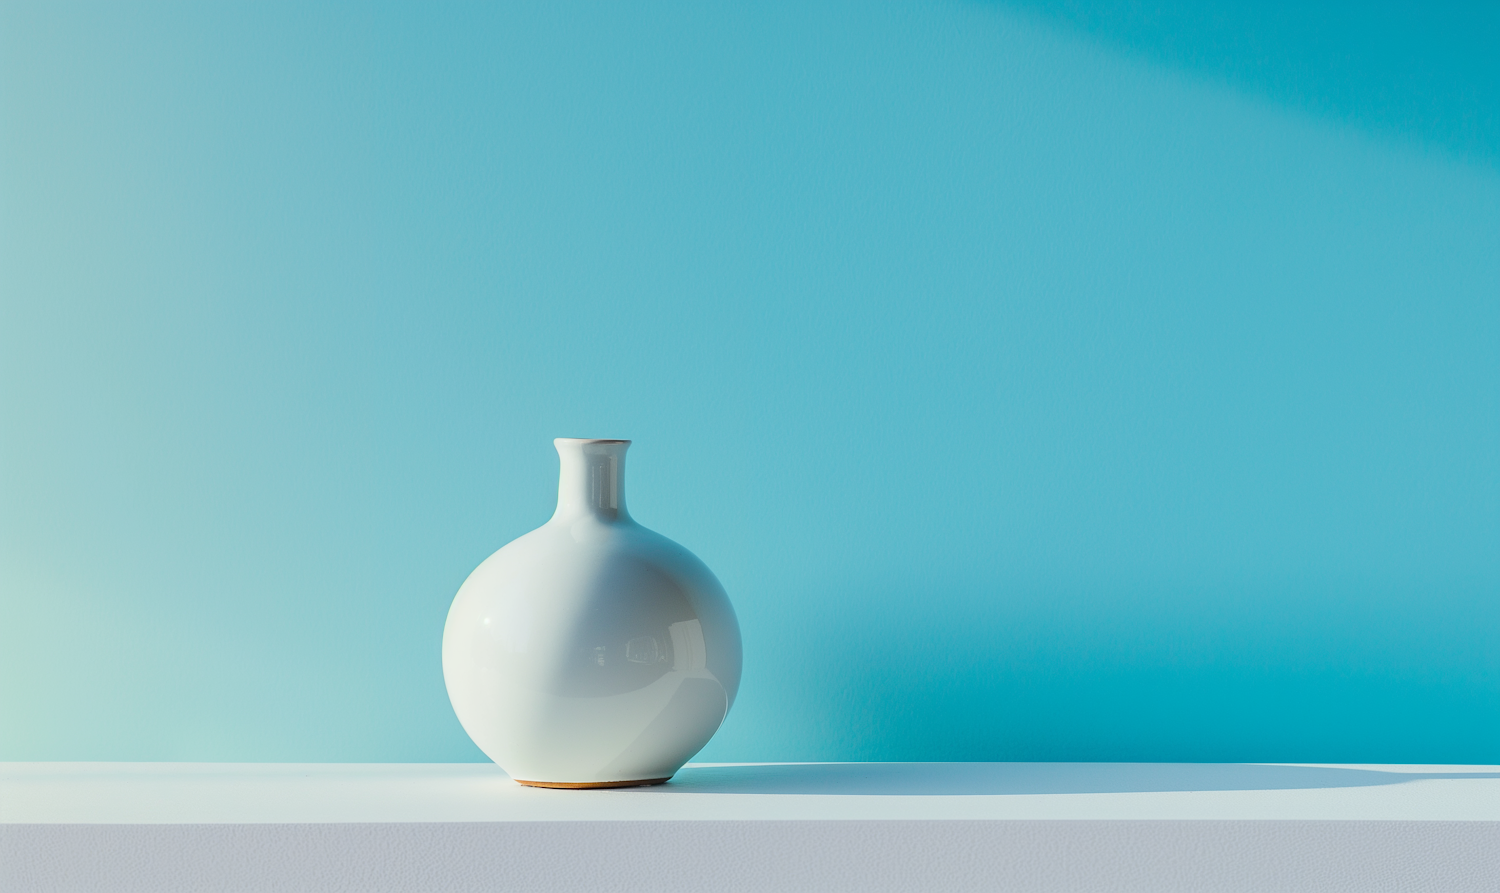 Minimalist White Vase on Blue Gradient